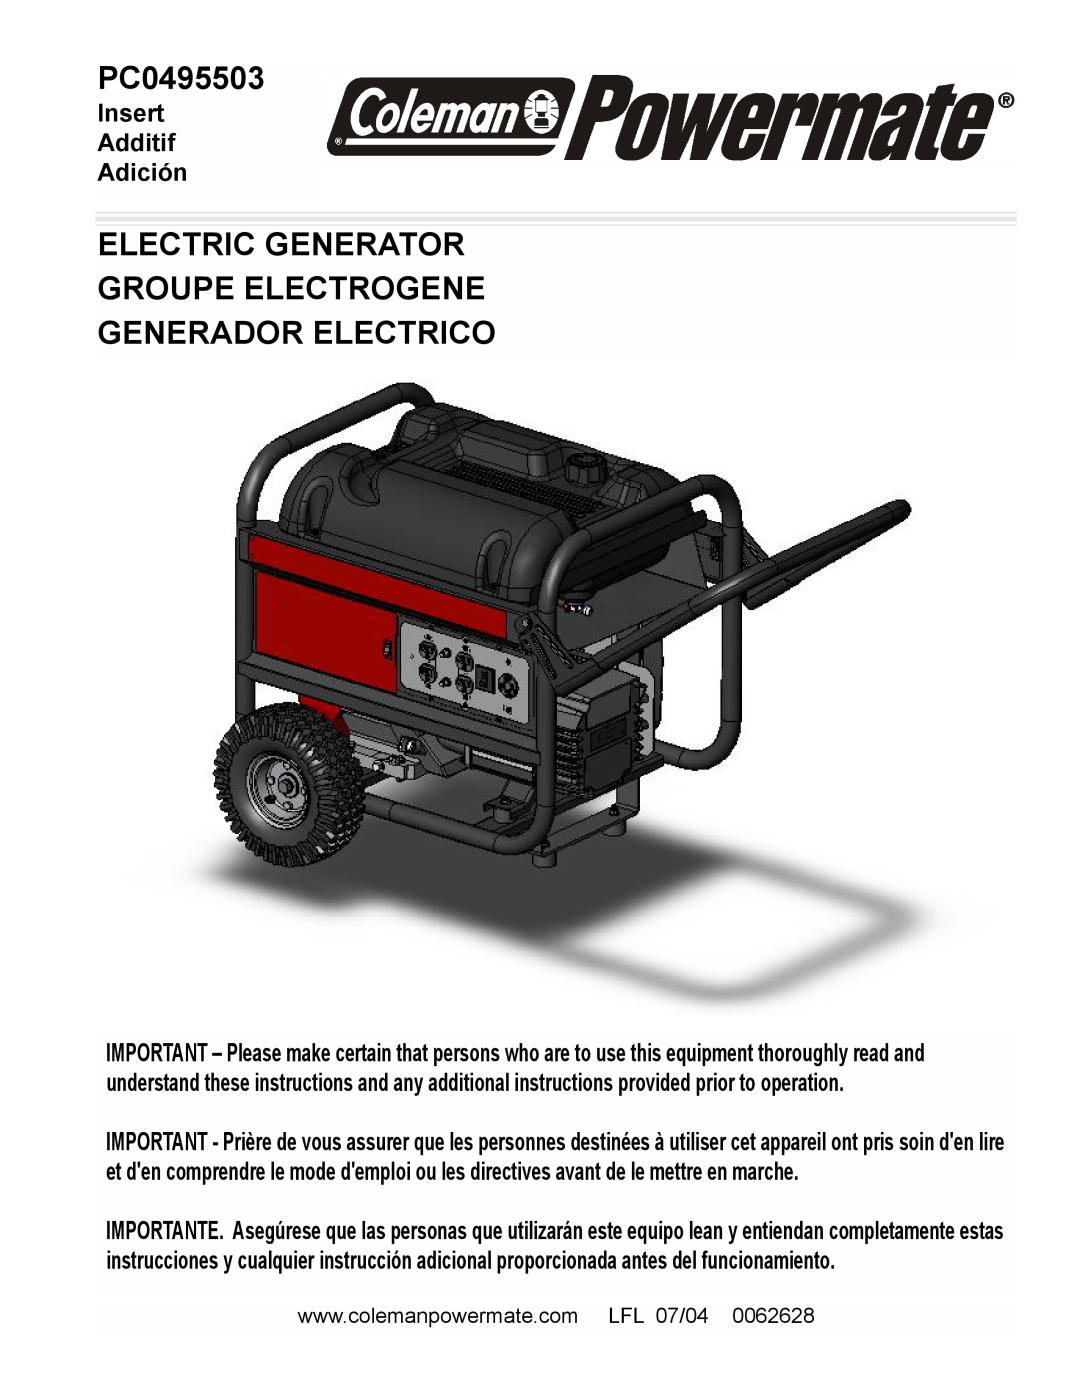 Powermate PC0495503 manual Electric Generator Groupe Electrogene, Generador Electrico, Insert Additif Adición 